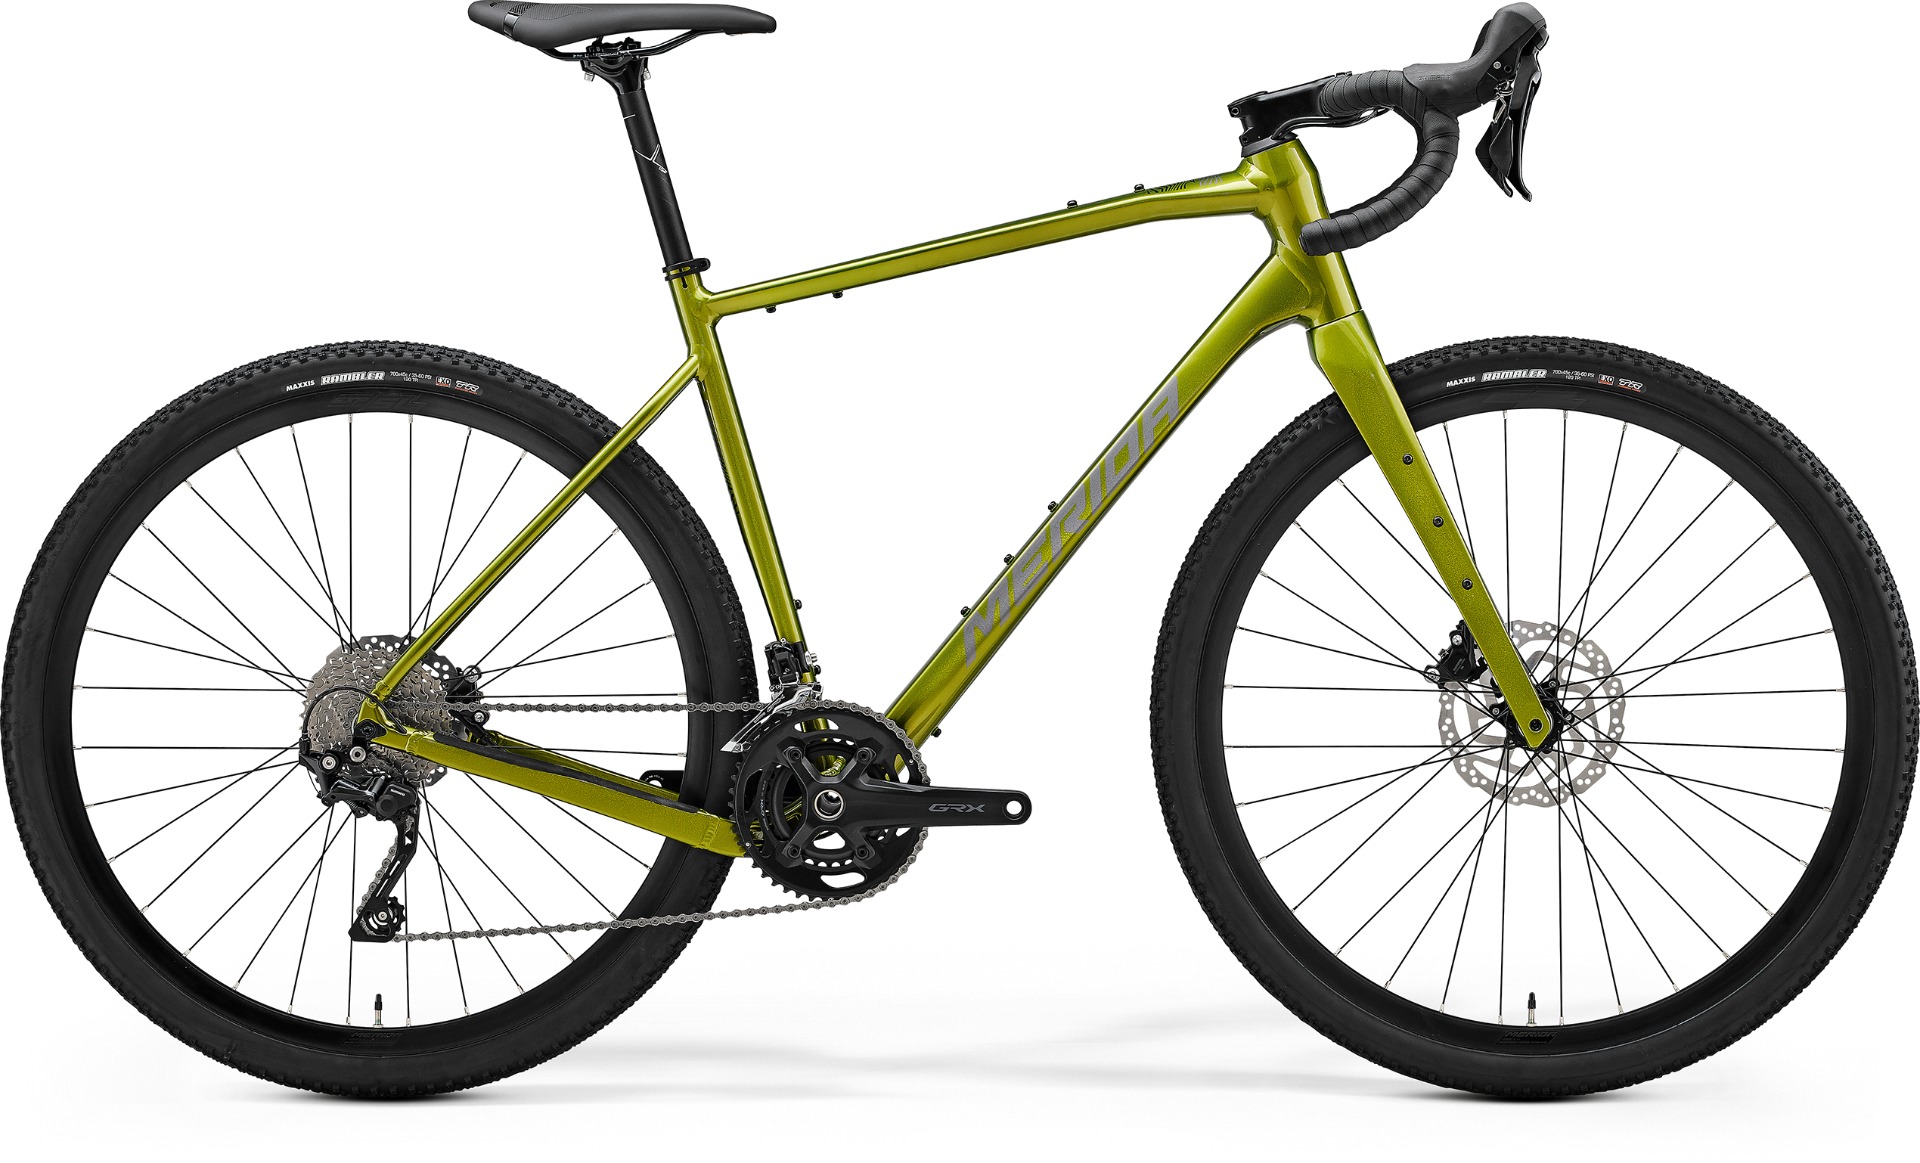 Bicycle Merida SILEX 400 II1 FALL GREEN(GREY/BLACK)